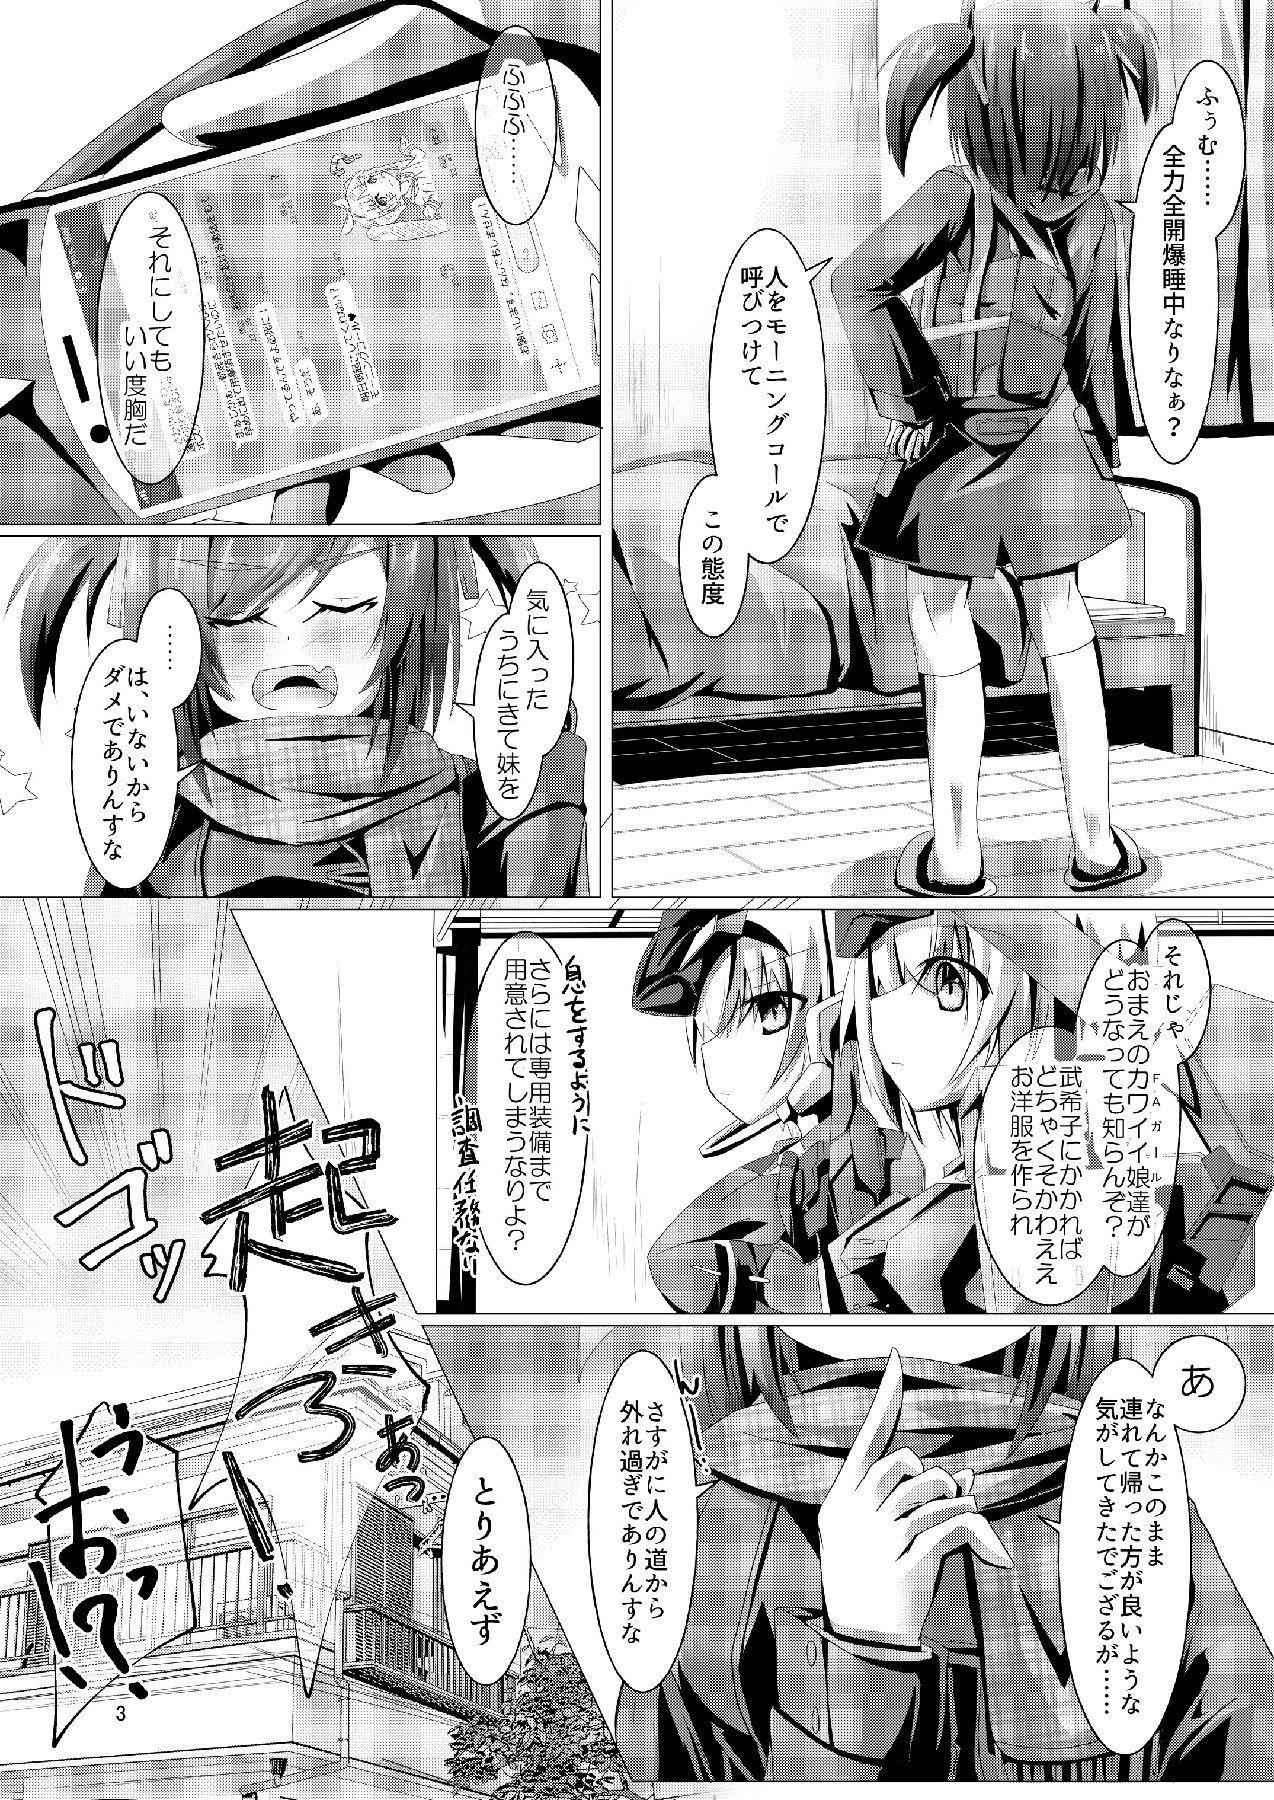 Roundass Bukiko ga Kokuhaku Sareta Ken 3 - Frame arms girl Sexo Anal - Page 3